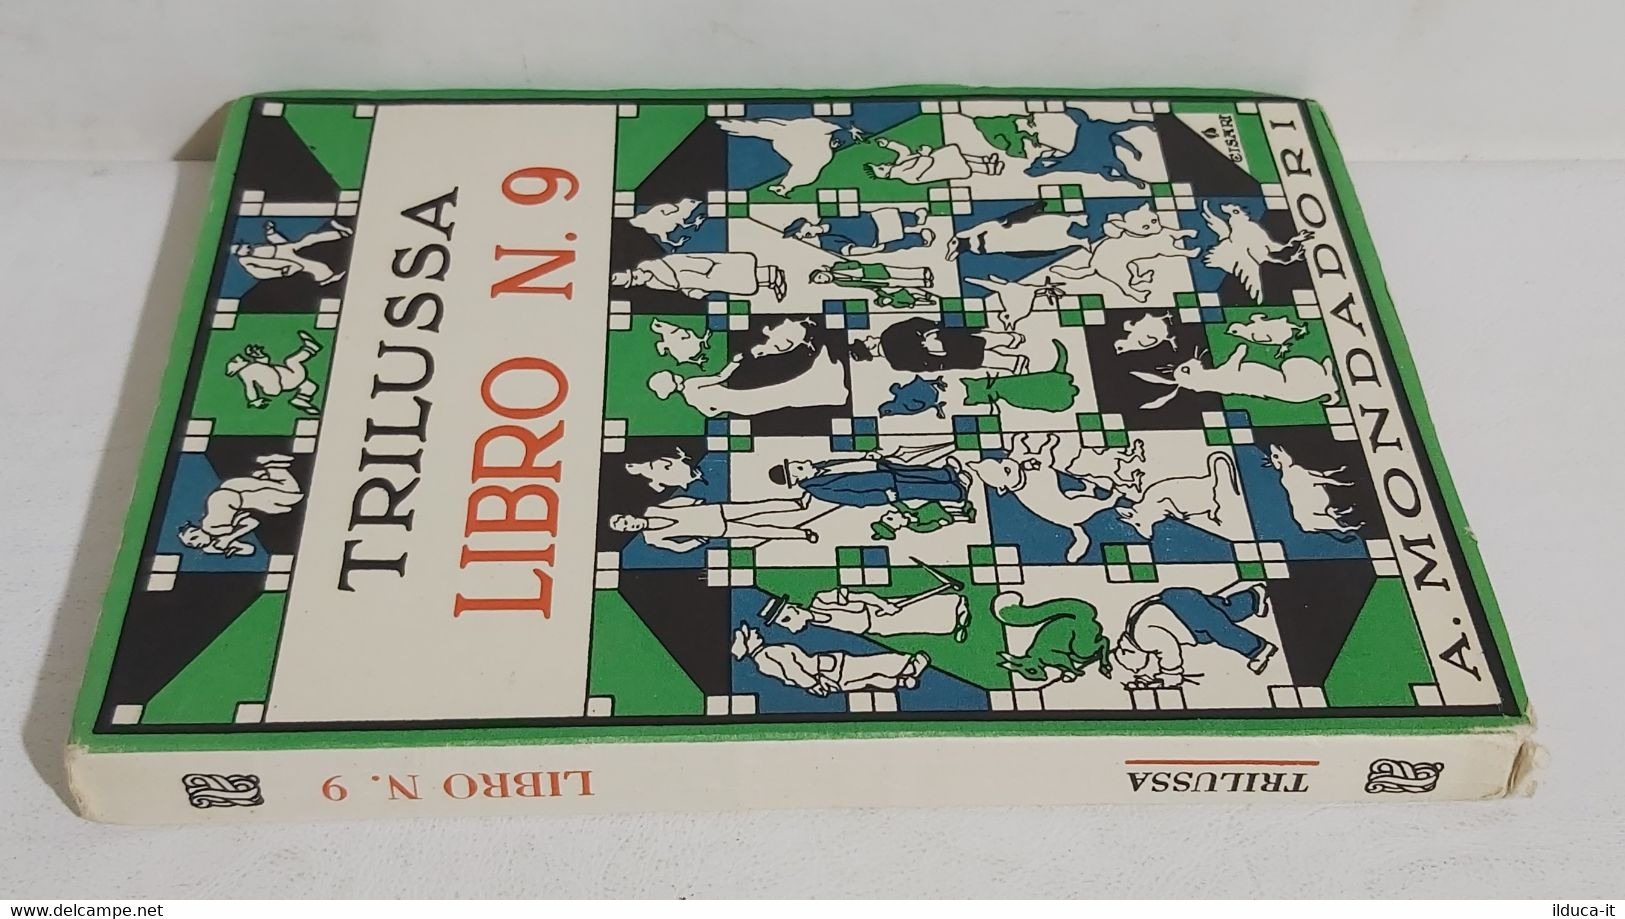 I103692 Trilussa - Libro N. 9 - Mondadori 1935 - Poetry